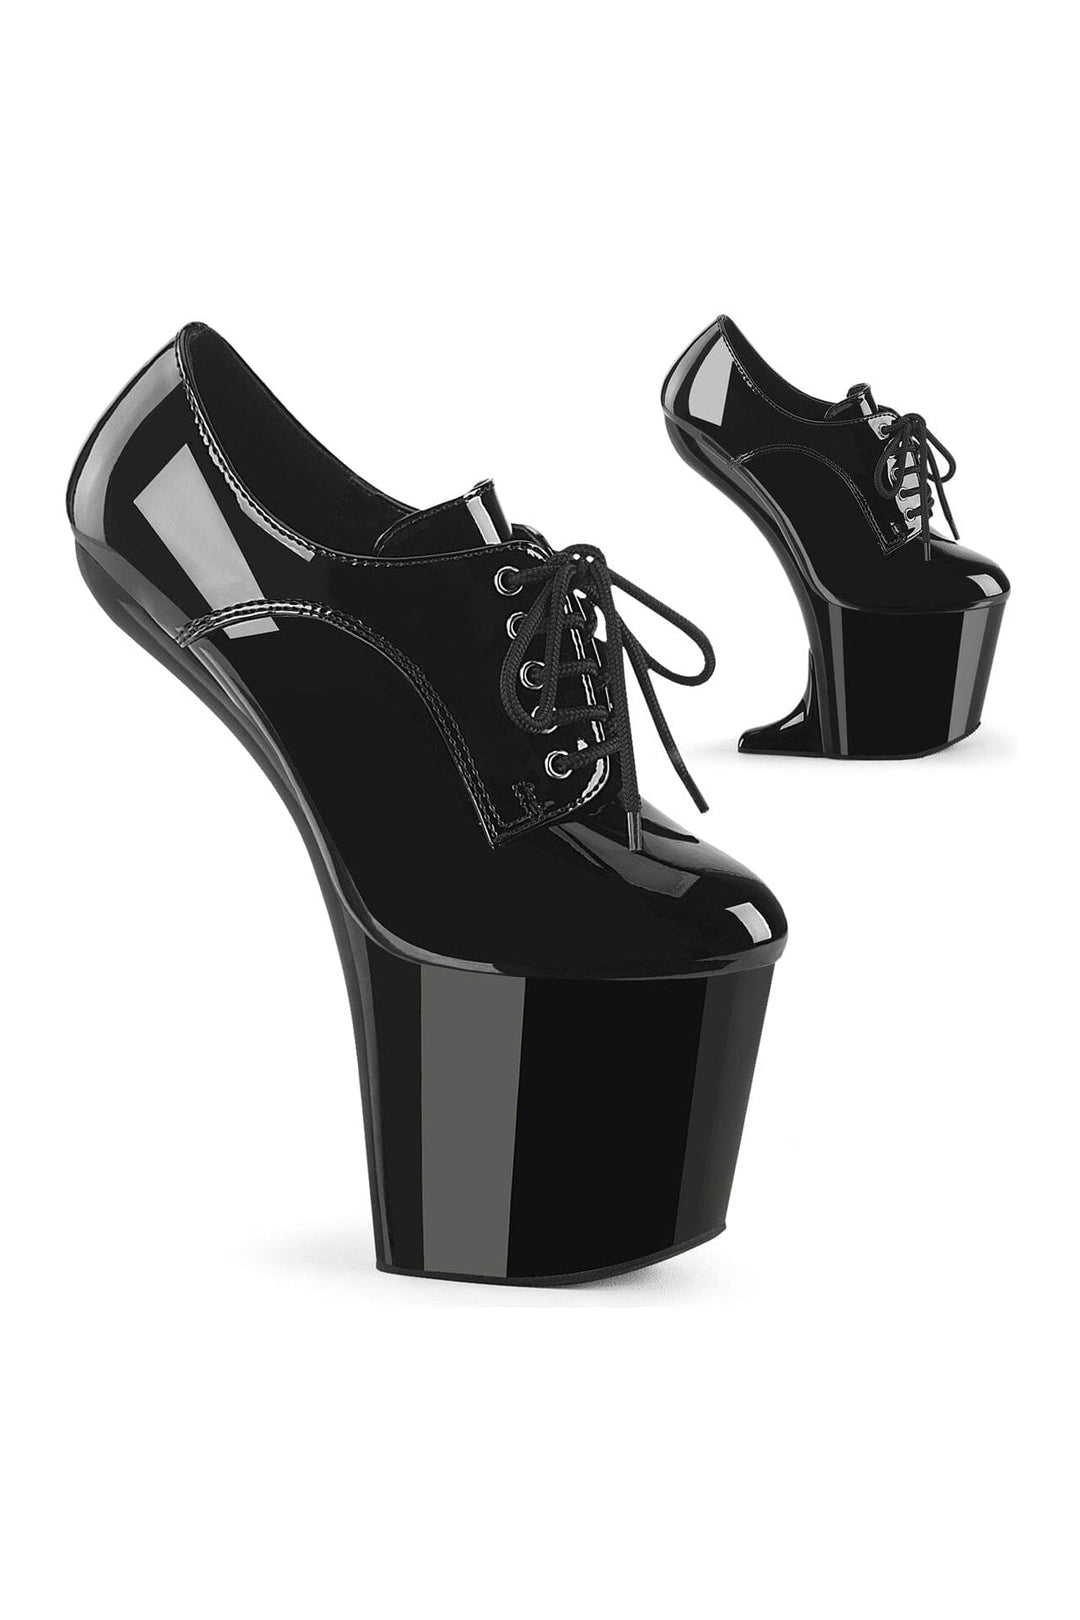 Pleaser Black Pumps Platform Stripper Shoes | Buy at Sexyshoes.com